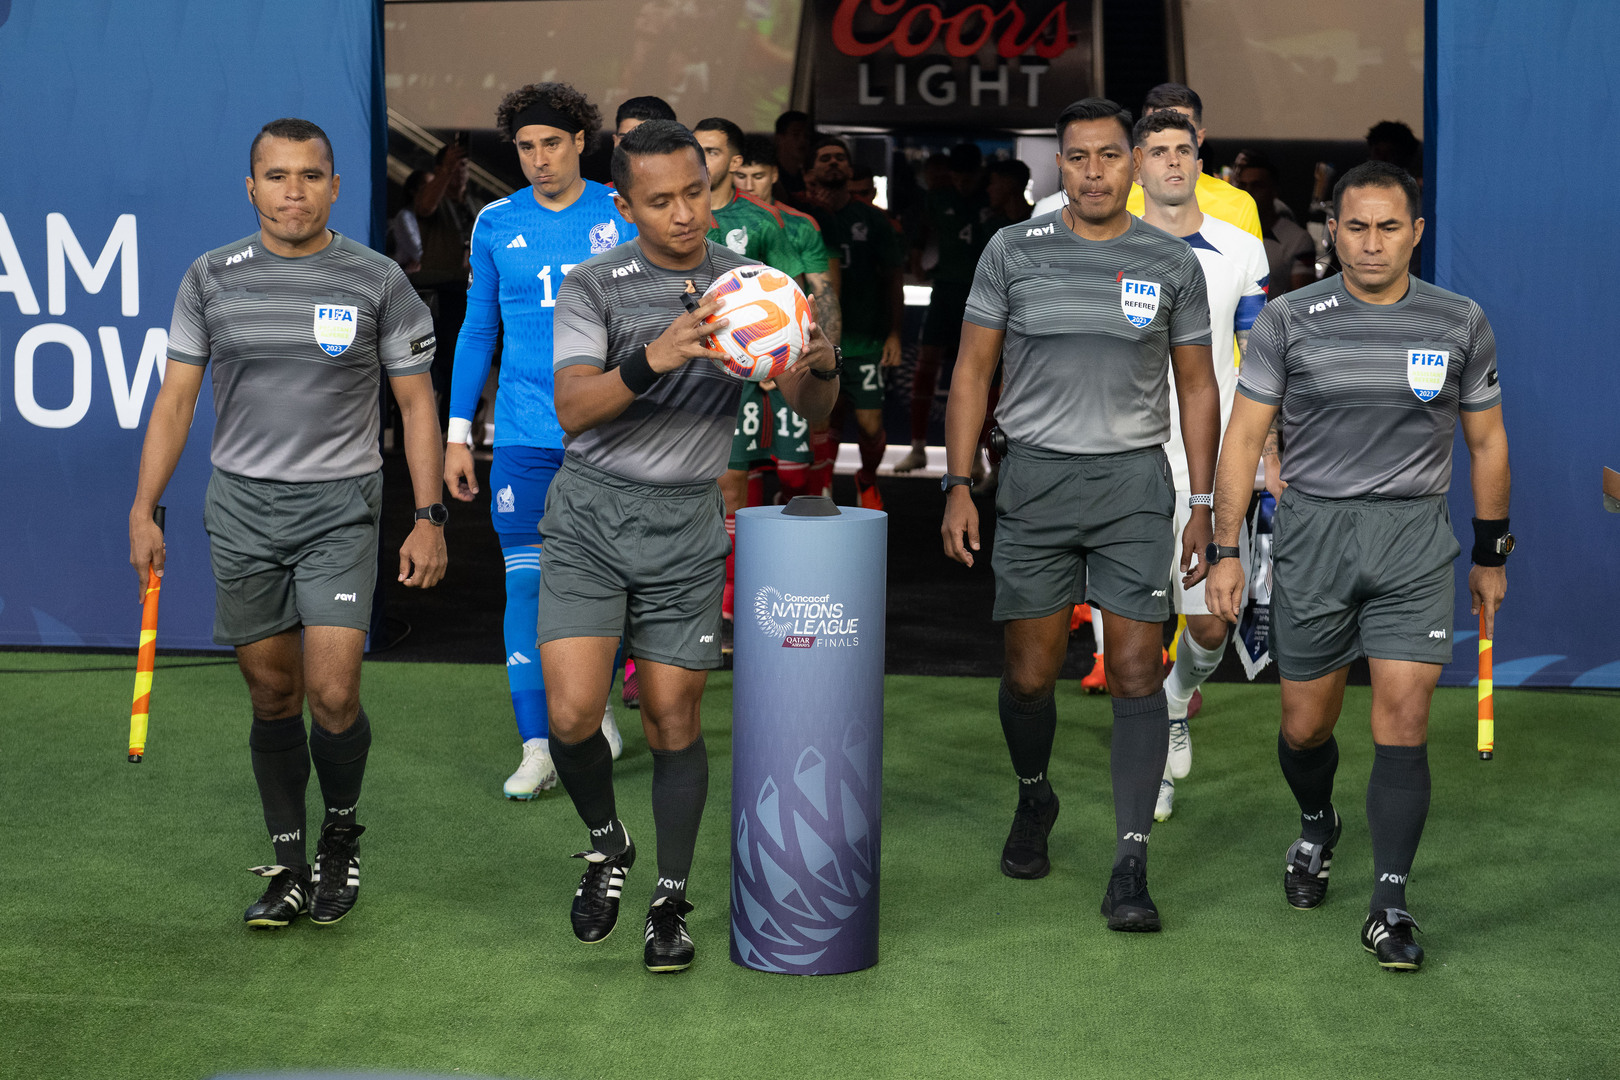 Míchel Salgado returns to football to play in Panama league - AS USA